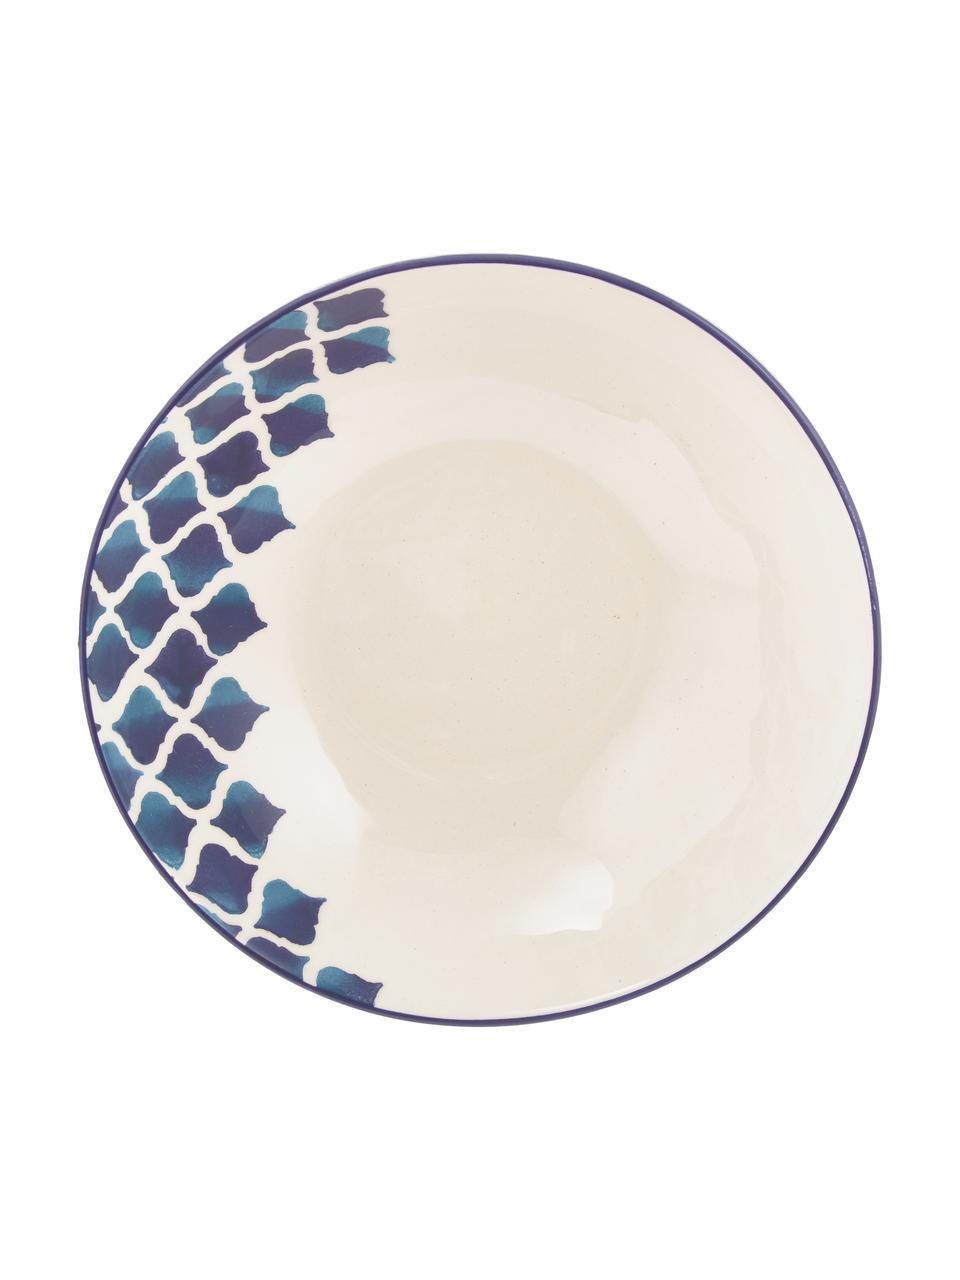 Ručně vyrobená salátová mísa Ikat, Ø 26 cm, Keramika, Bílá, modrá, Ø 26 cm, V 8 cm